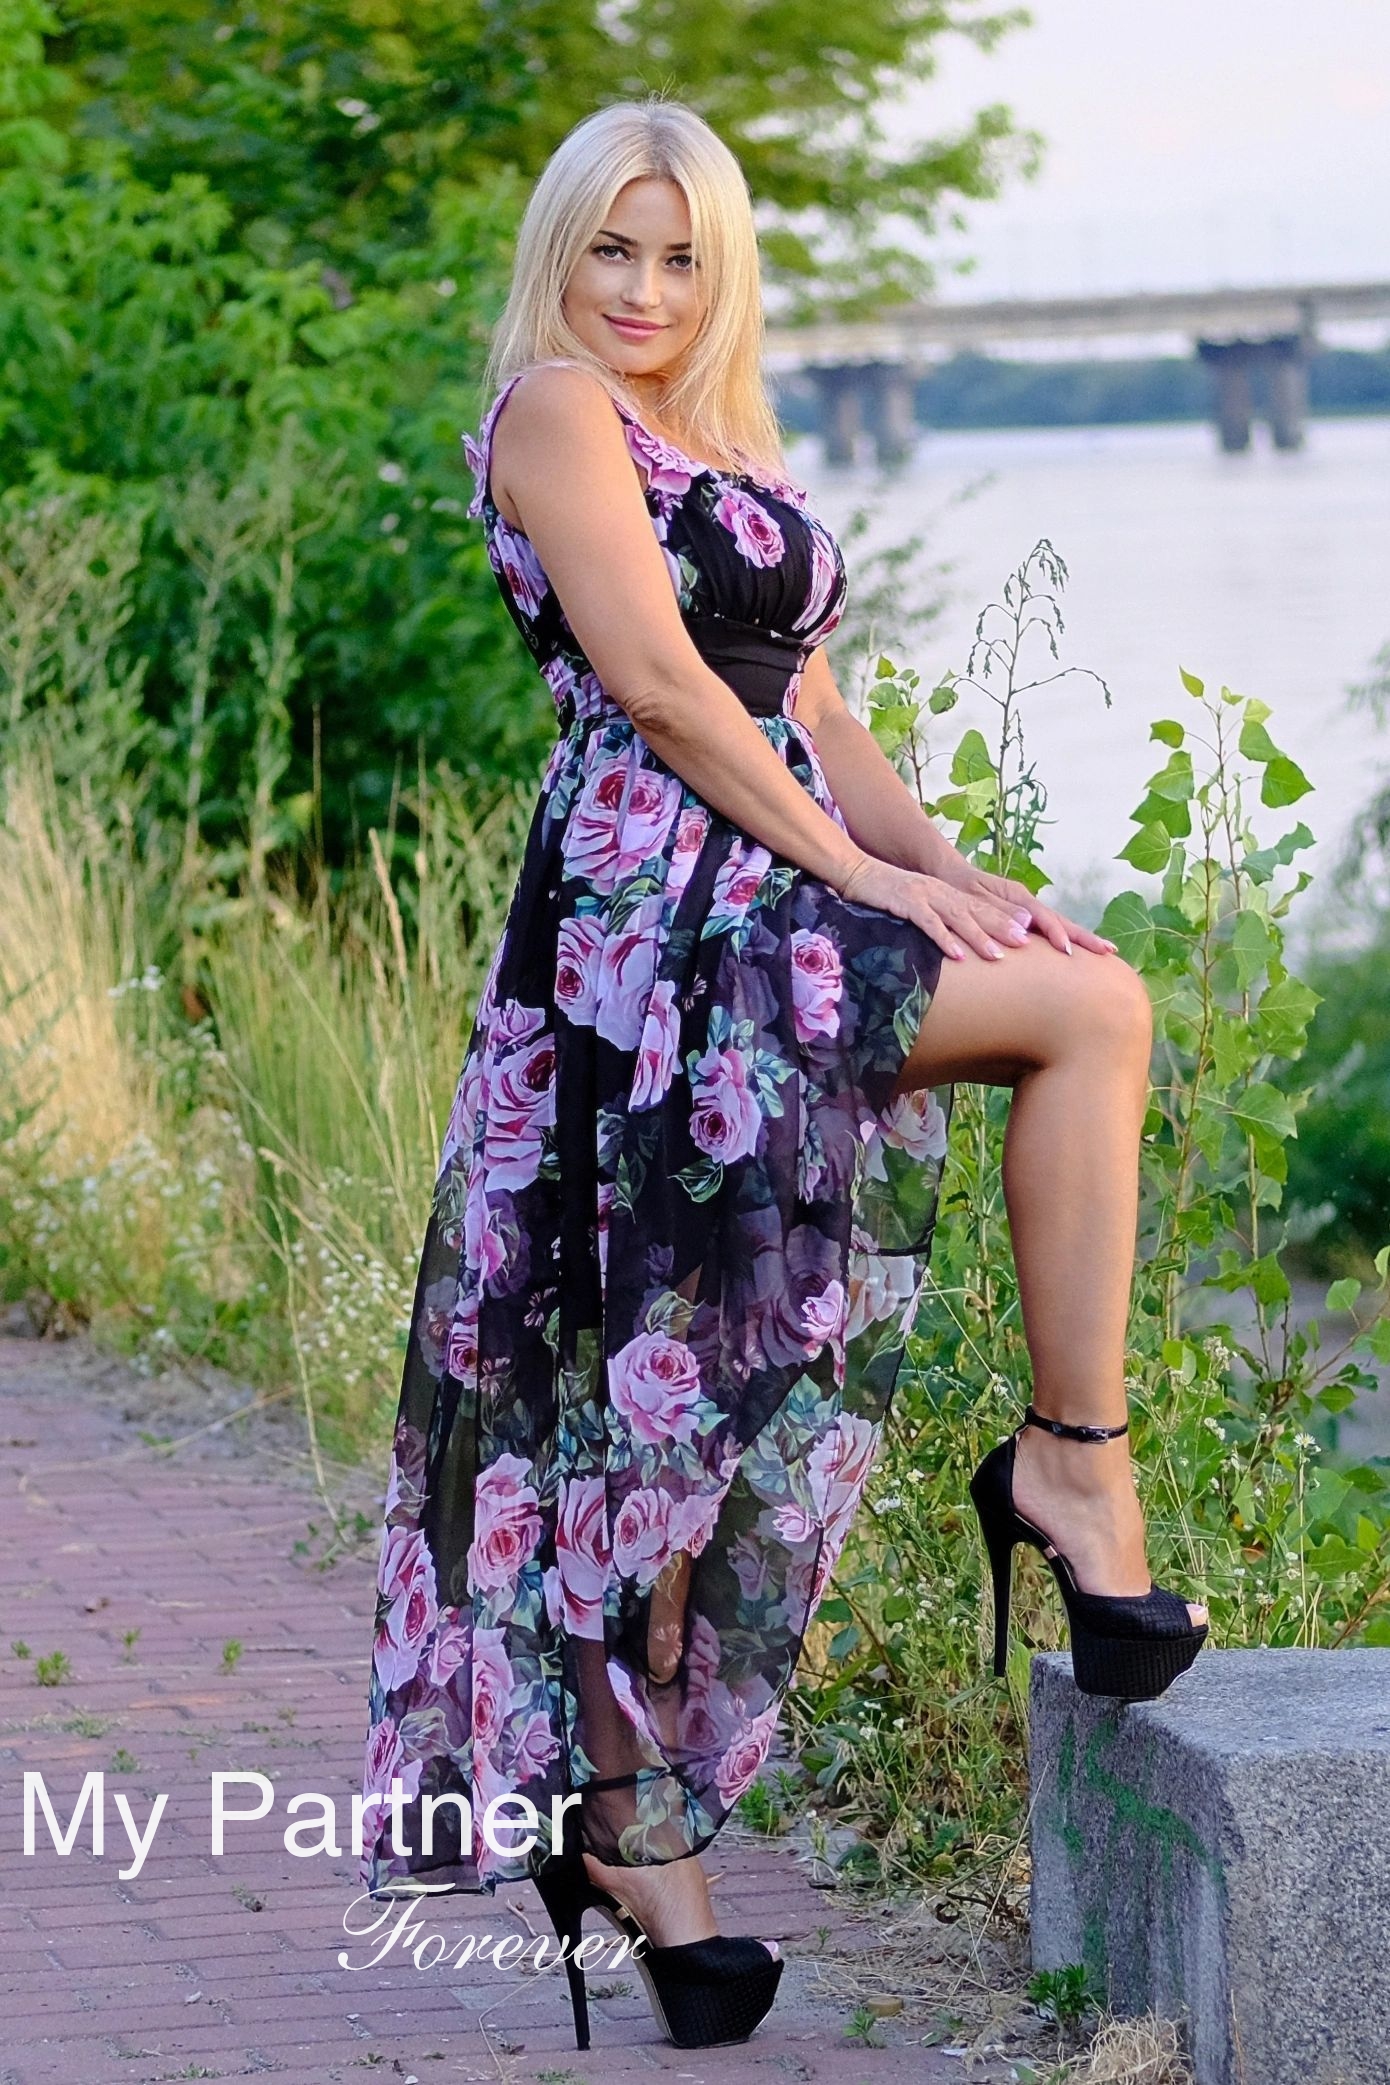 Meet Charming Ukrainian Girl Irina from Kiev, Ukraine